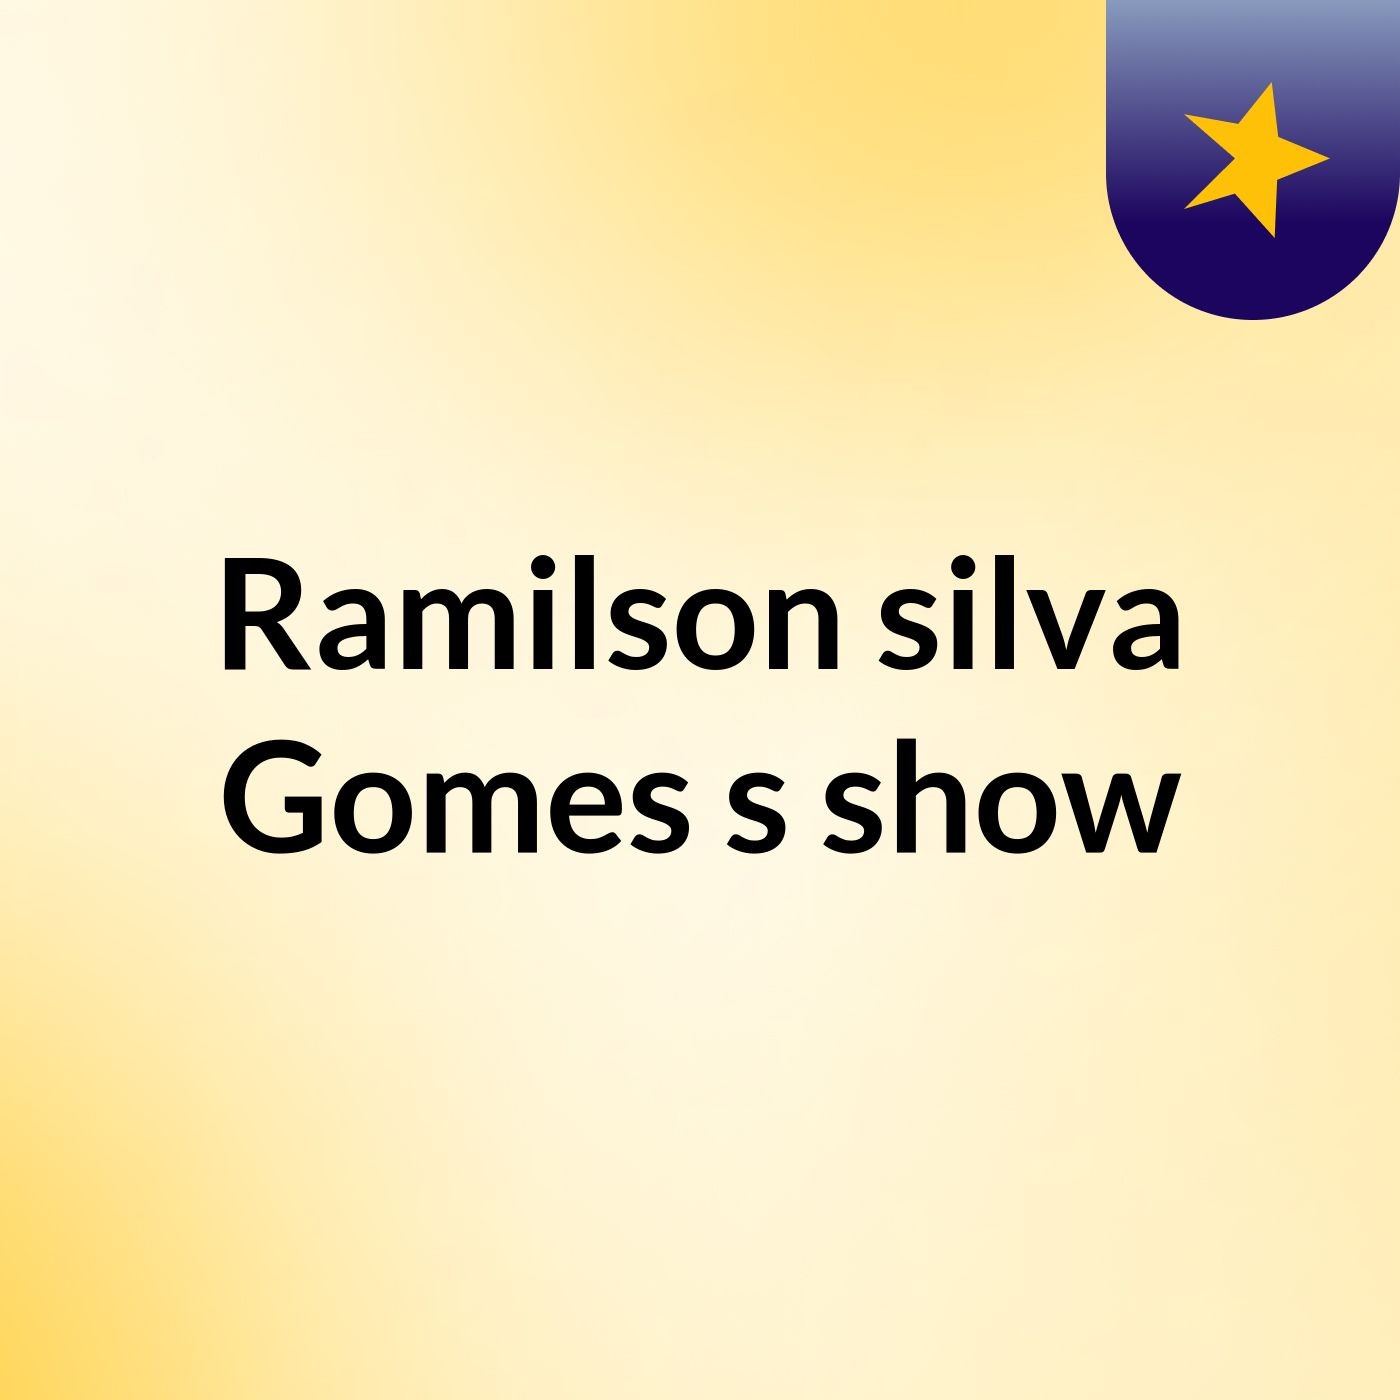 Ramilson silva Gomes's show